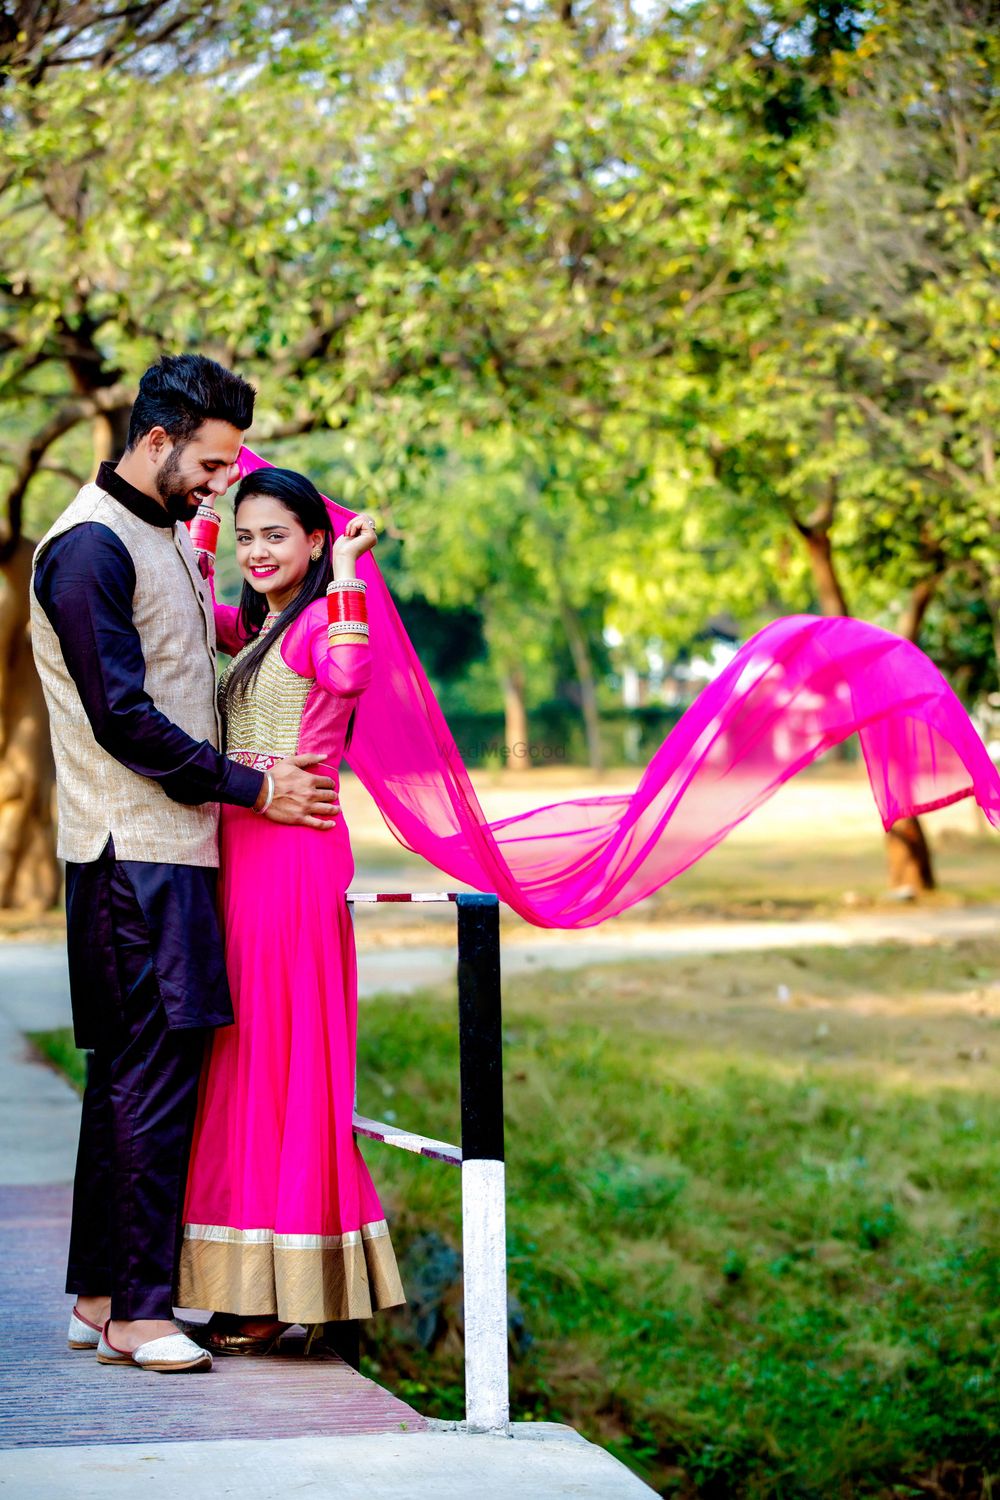 Photo From Pre Wedding - By Kshitiz Sharma Photography